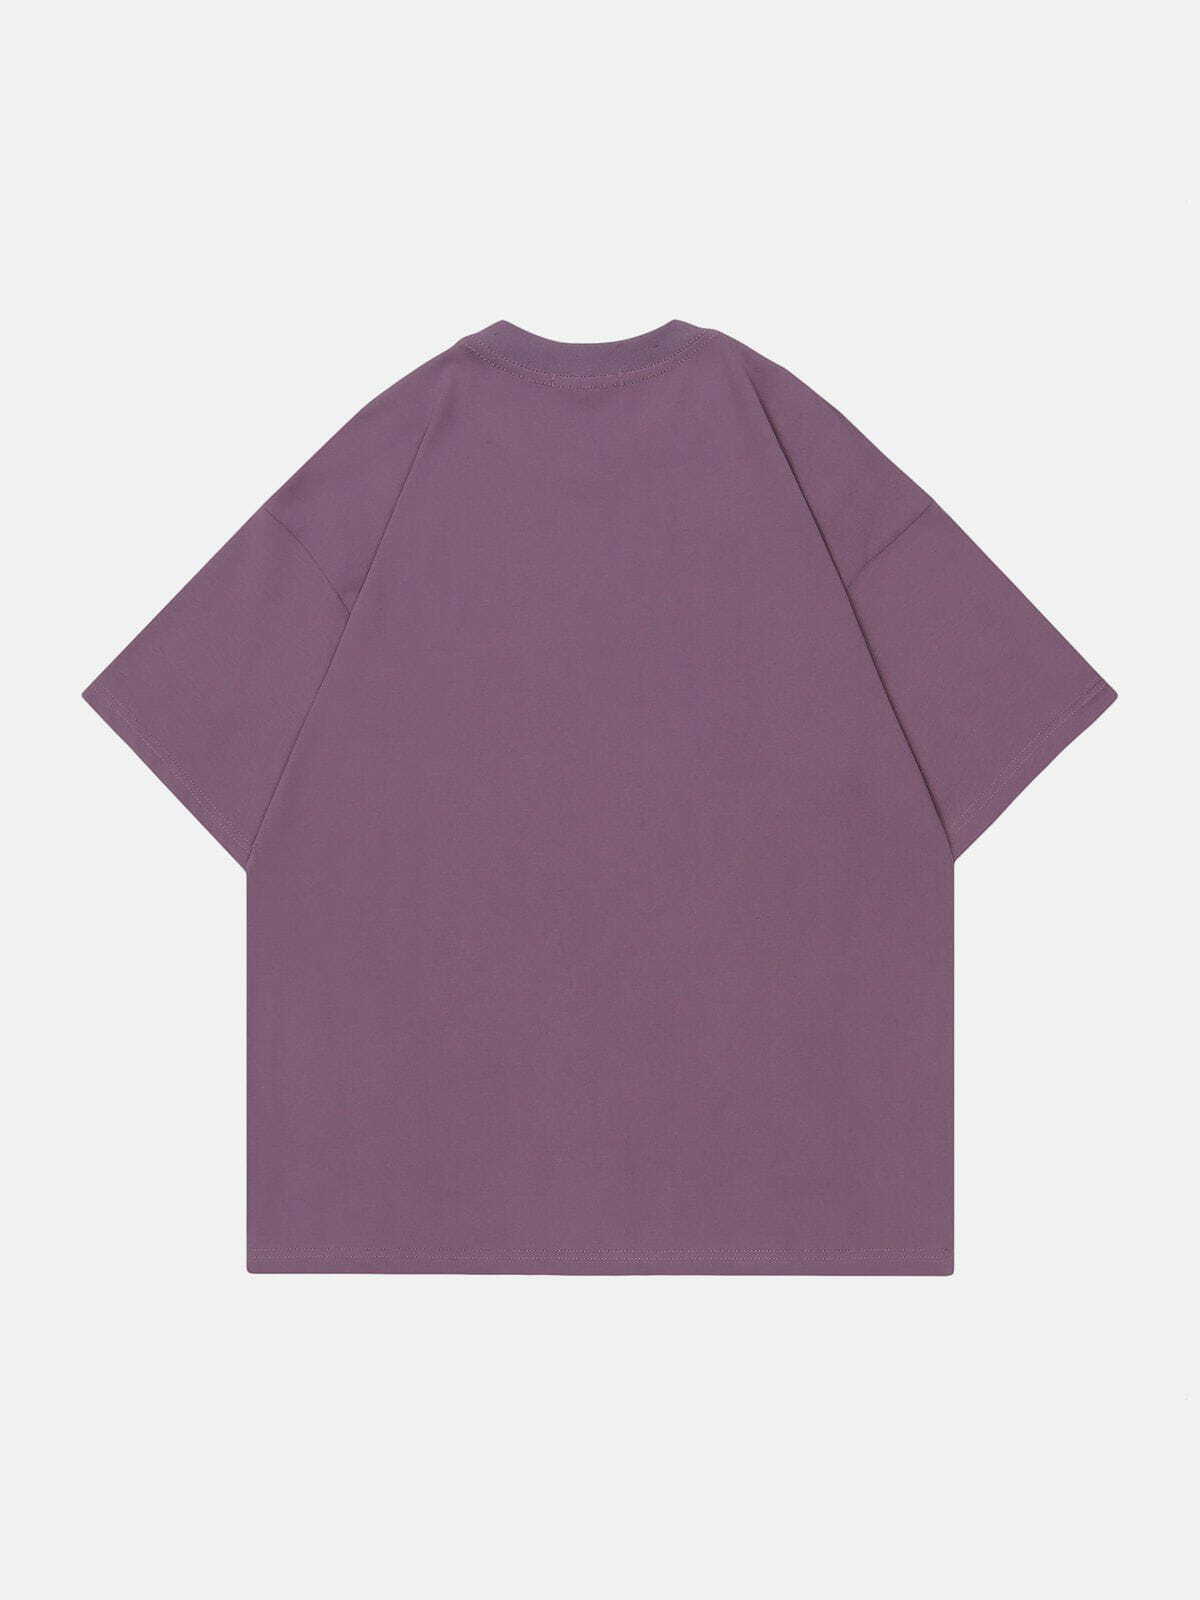 vibrant tie dye abstract tee edgy y2k print shirt 6363